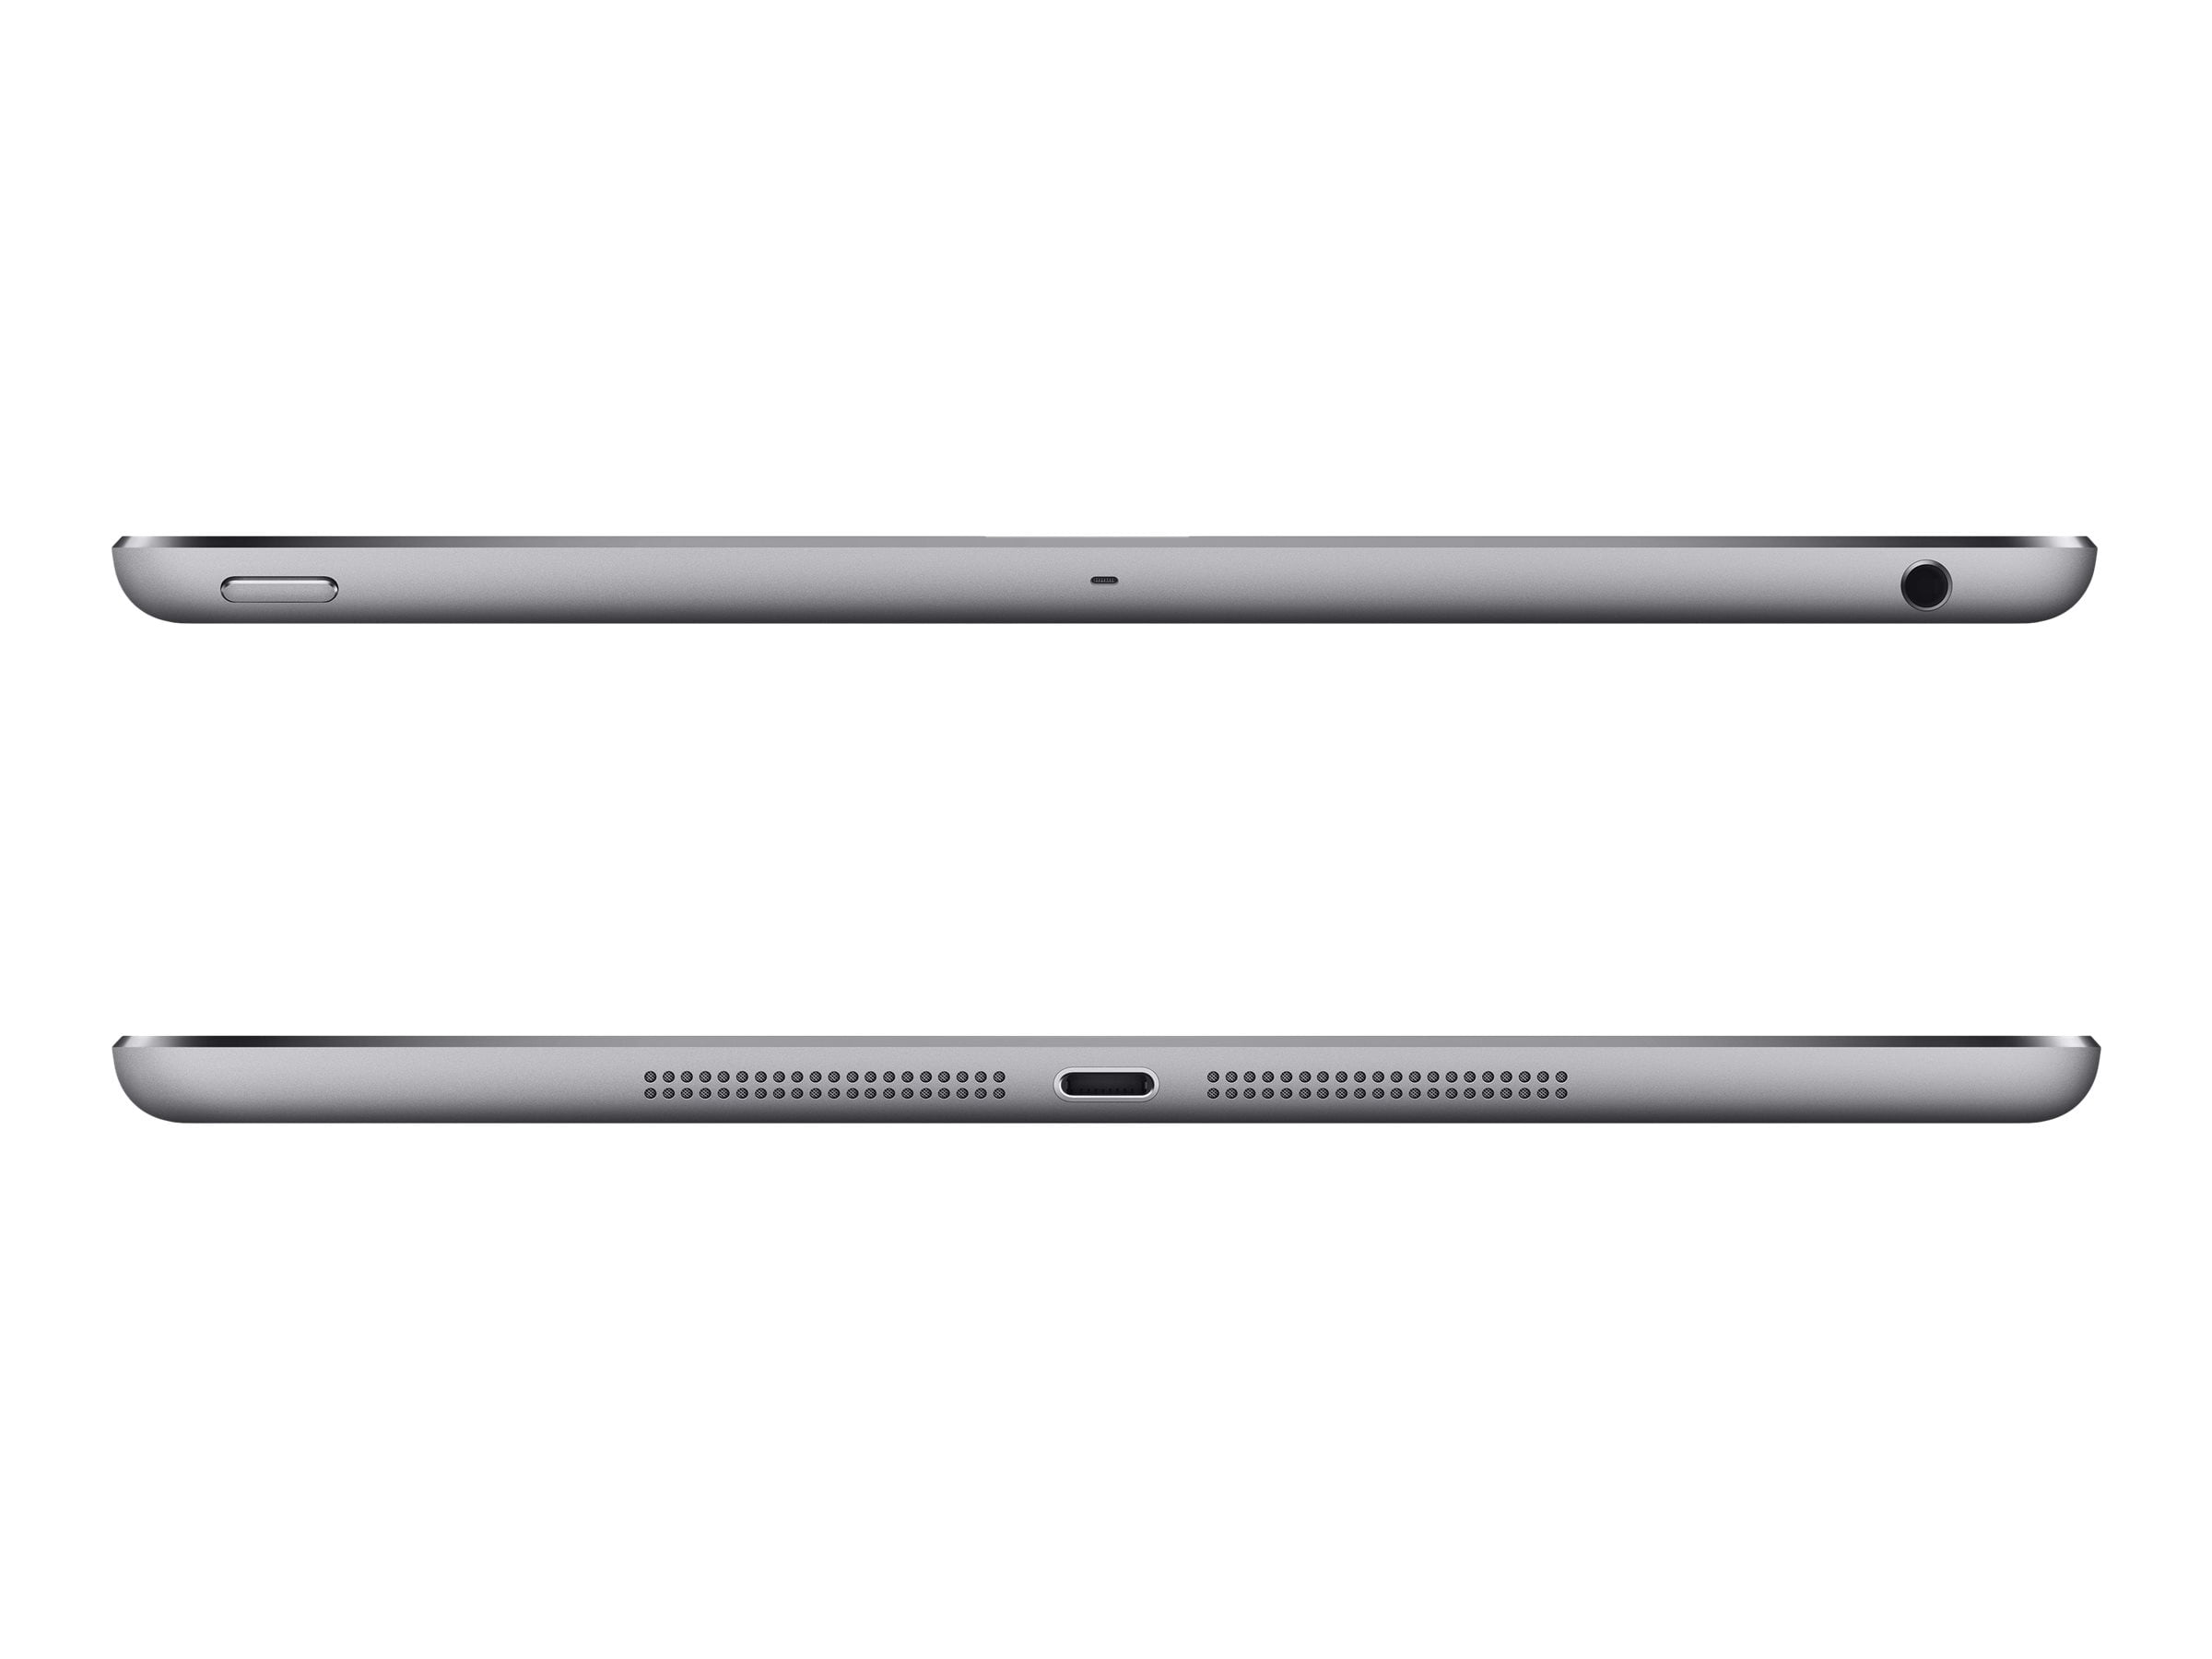 Apple iPad Air Wi-Fi Tablette 16 Go 9.7 IPS (2048 x 1536) gris